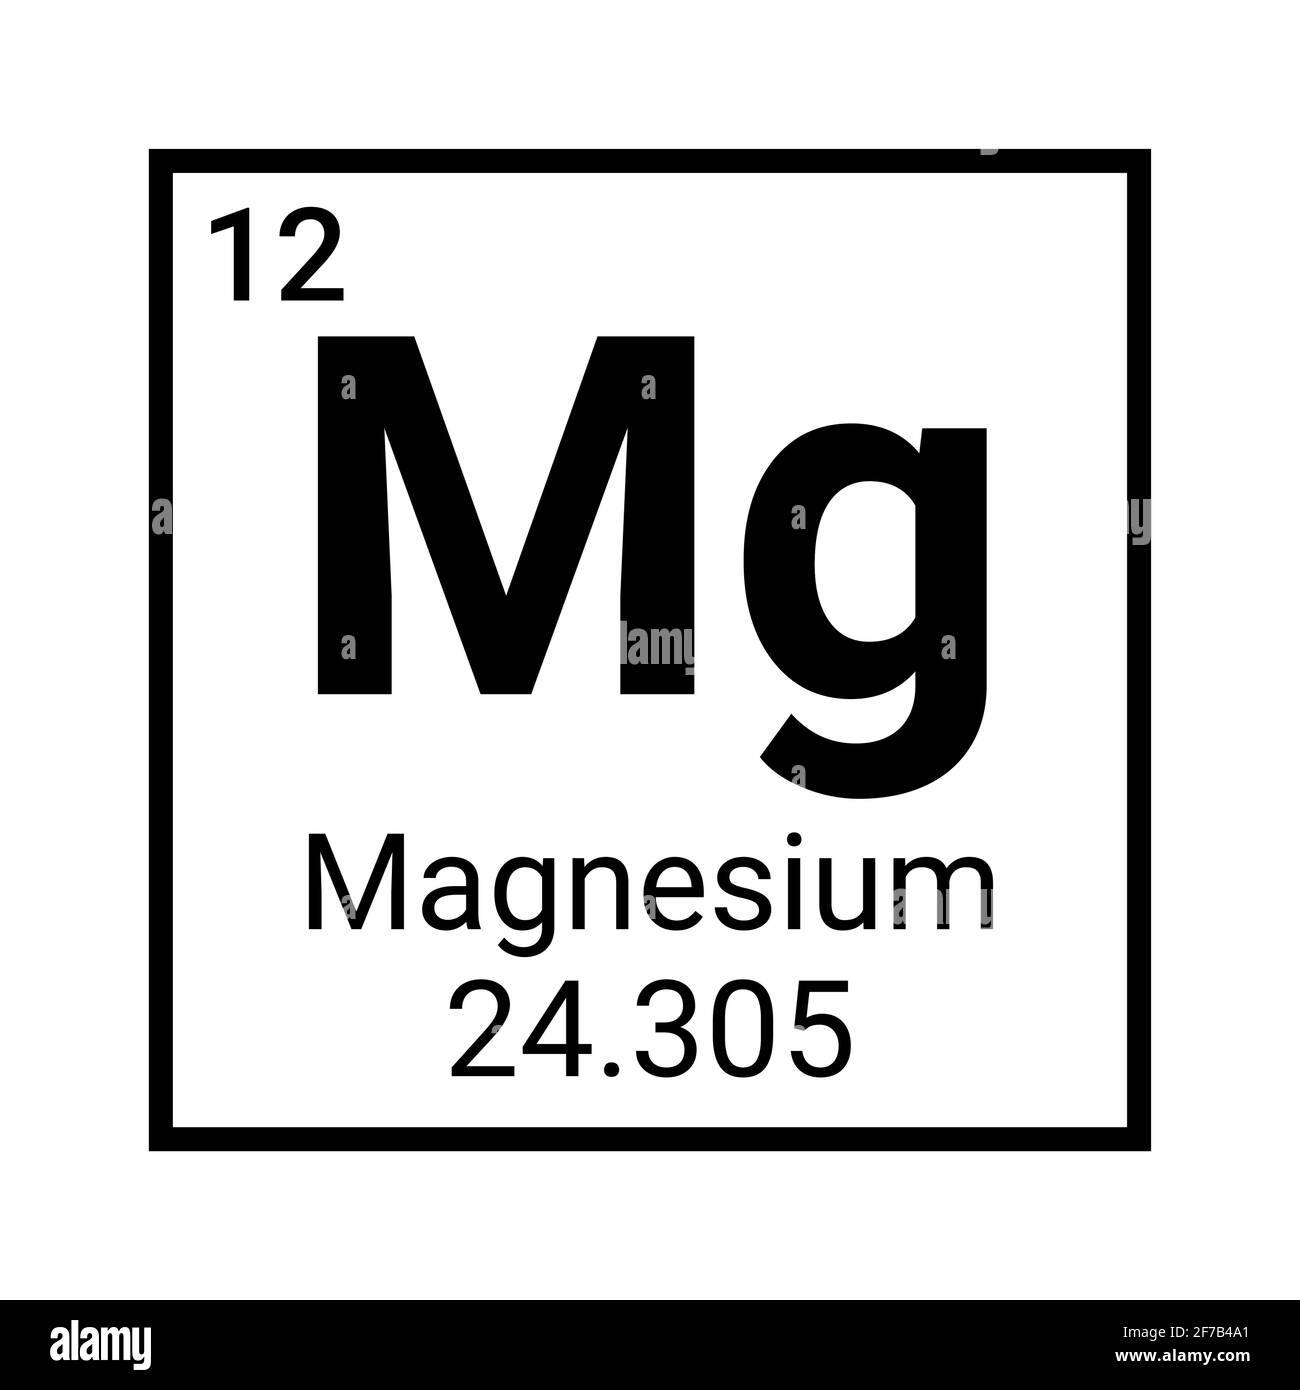 Magnesuim periodic element table symbol. Chemical science magnesium icon Stock Vector